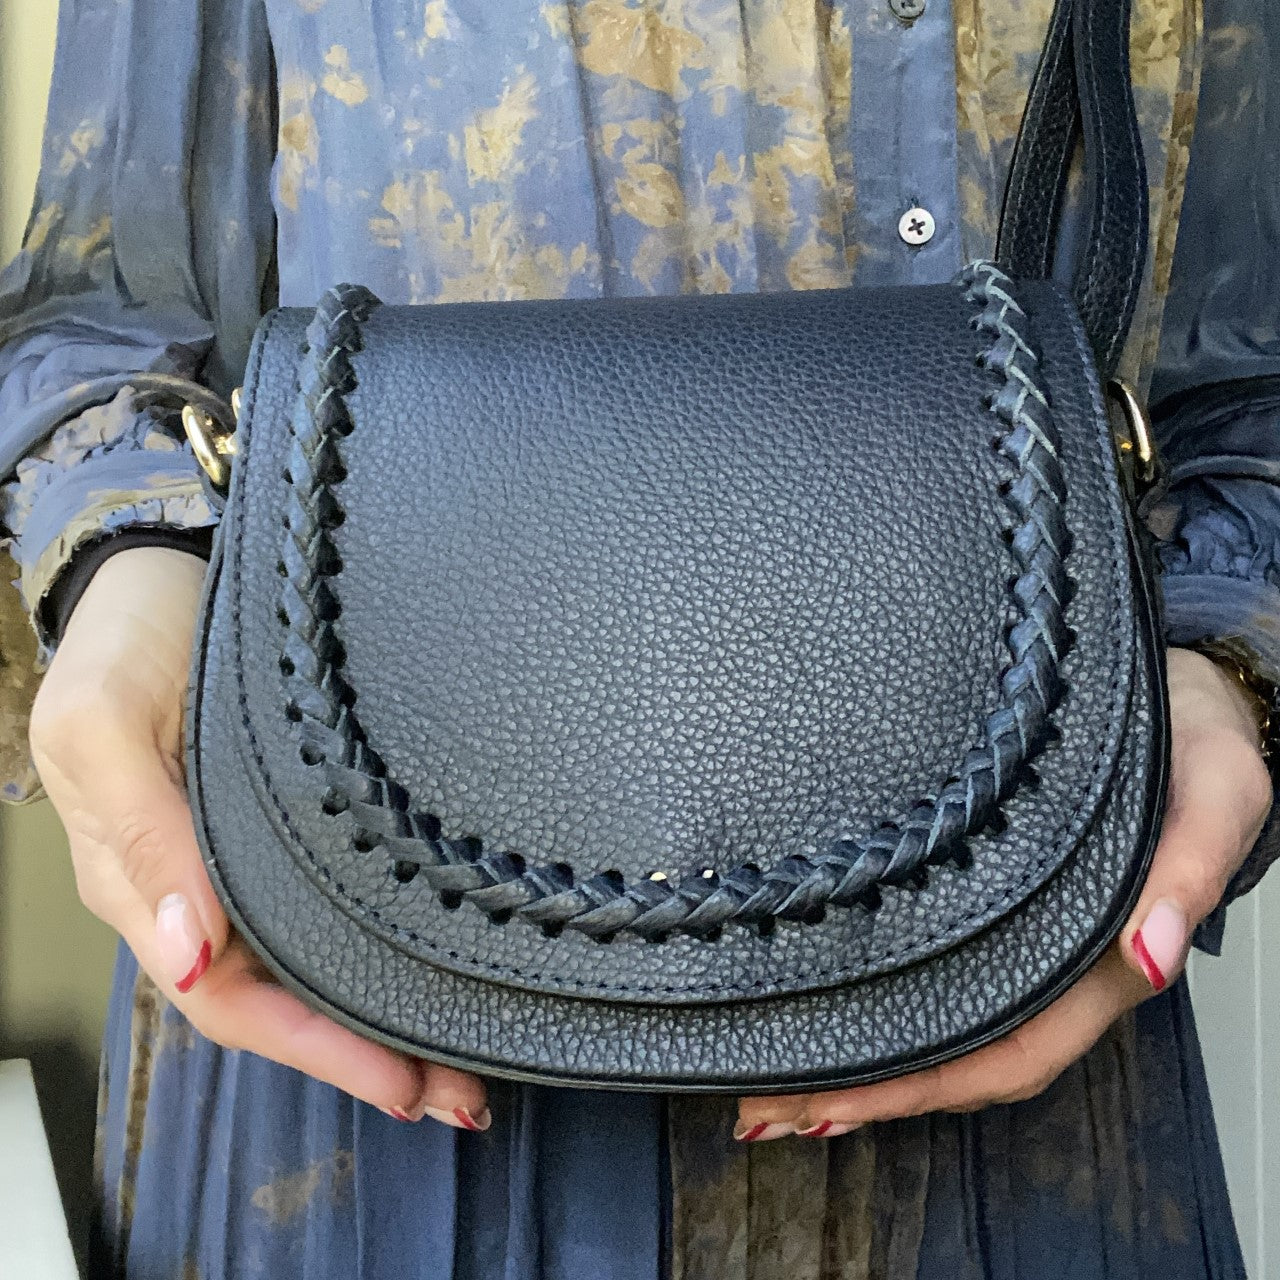 The Plaited Leather Saddle Bag